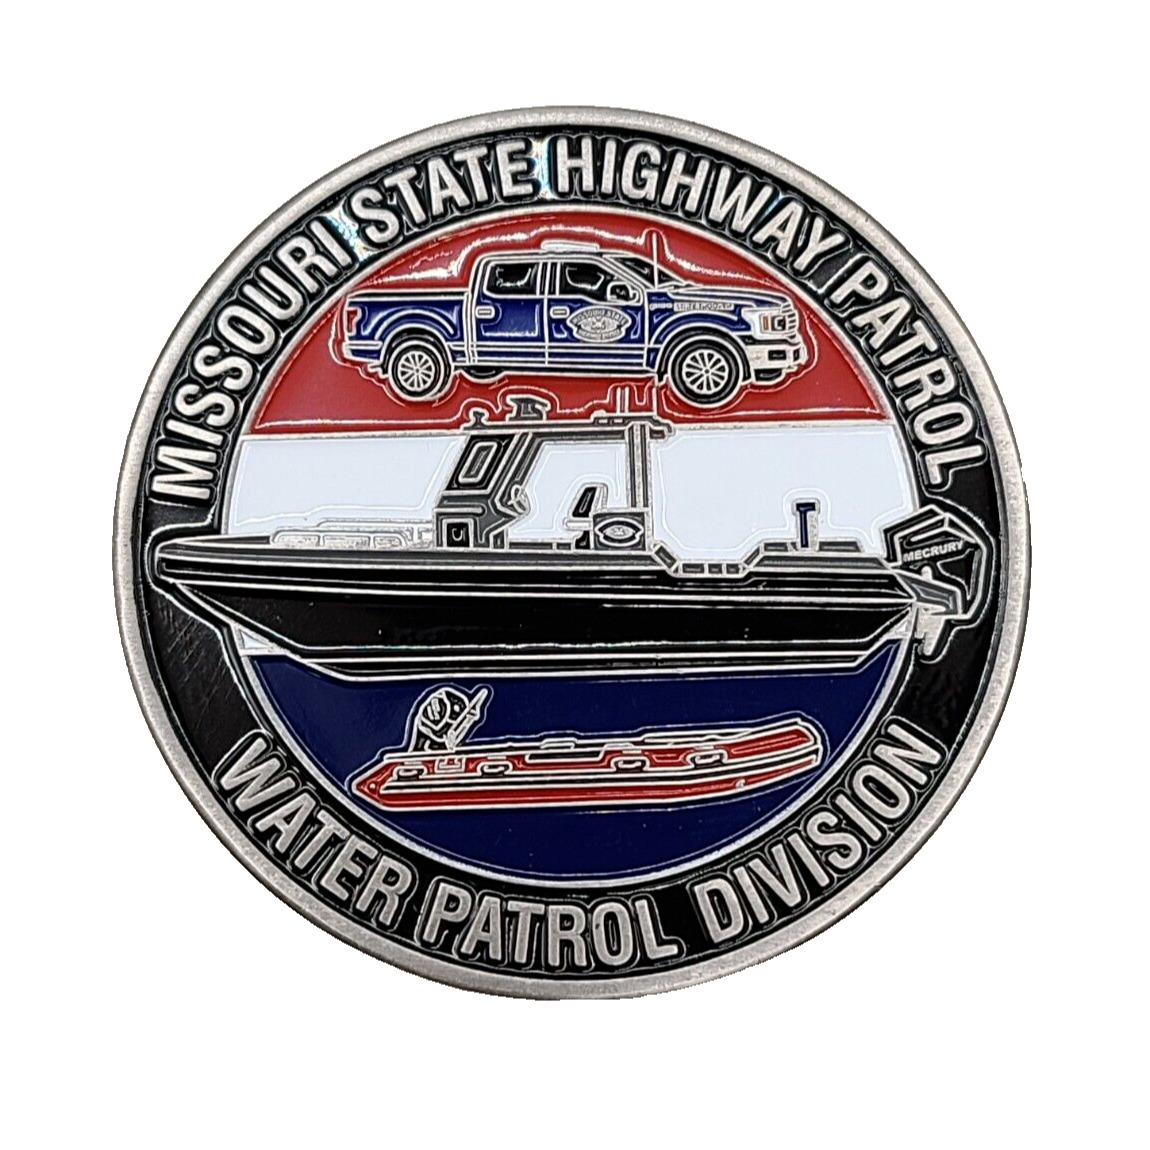 Marine Operation Missouri State Highway Patrol Water Patrol Division Coin